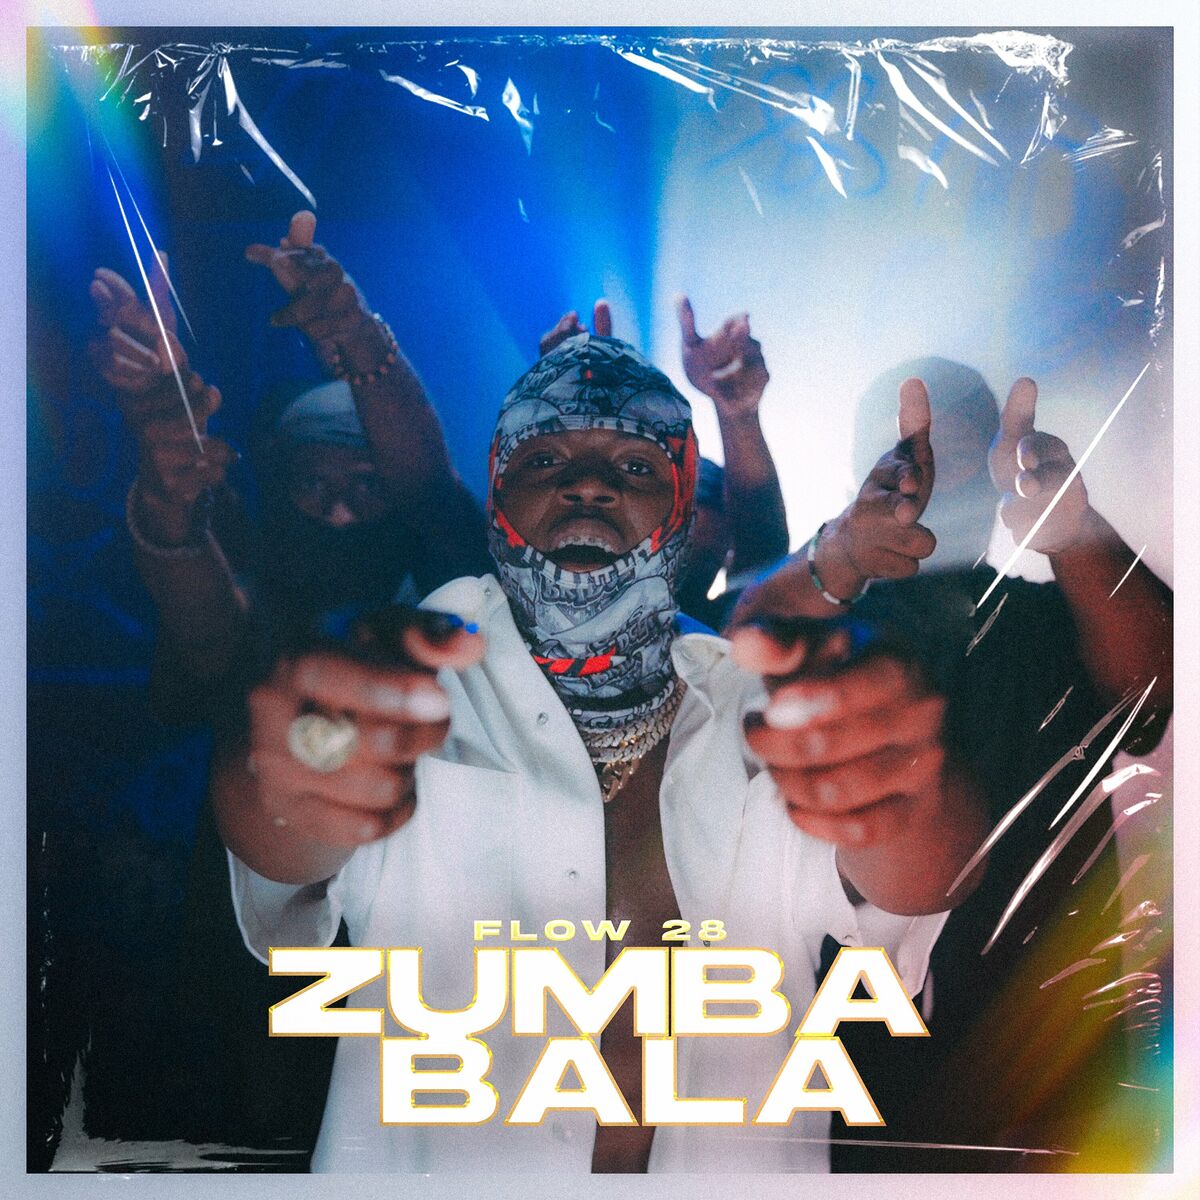 Flow 28 – Zumba Bala